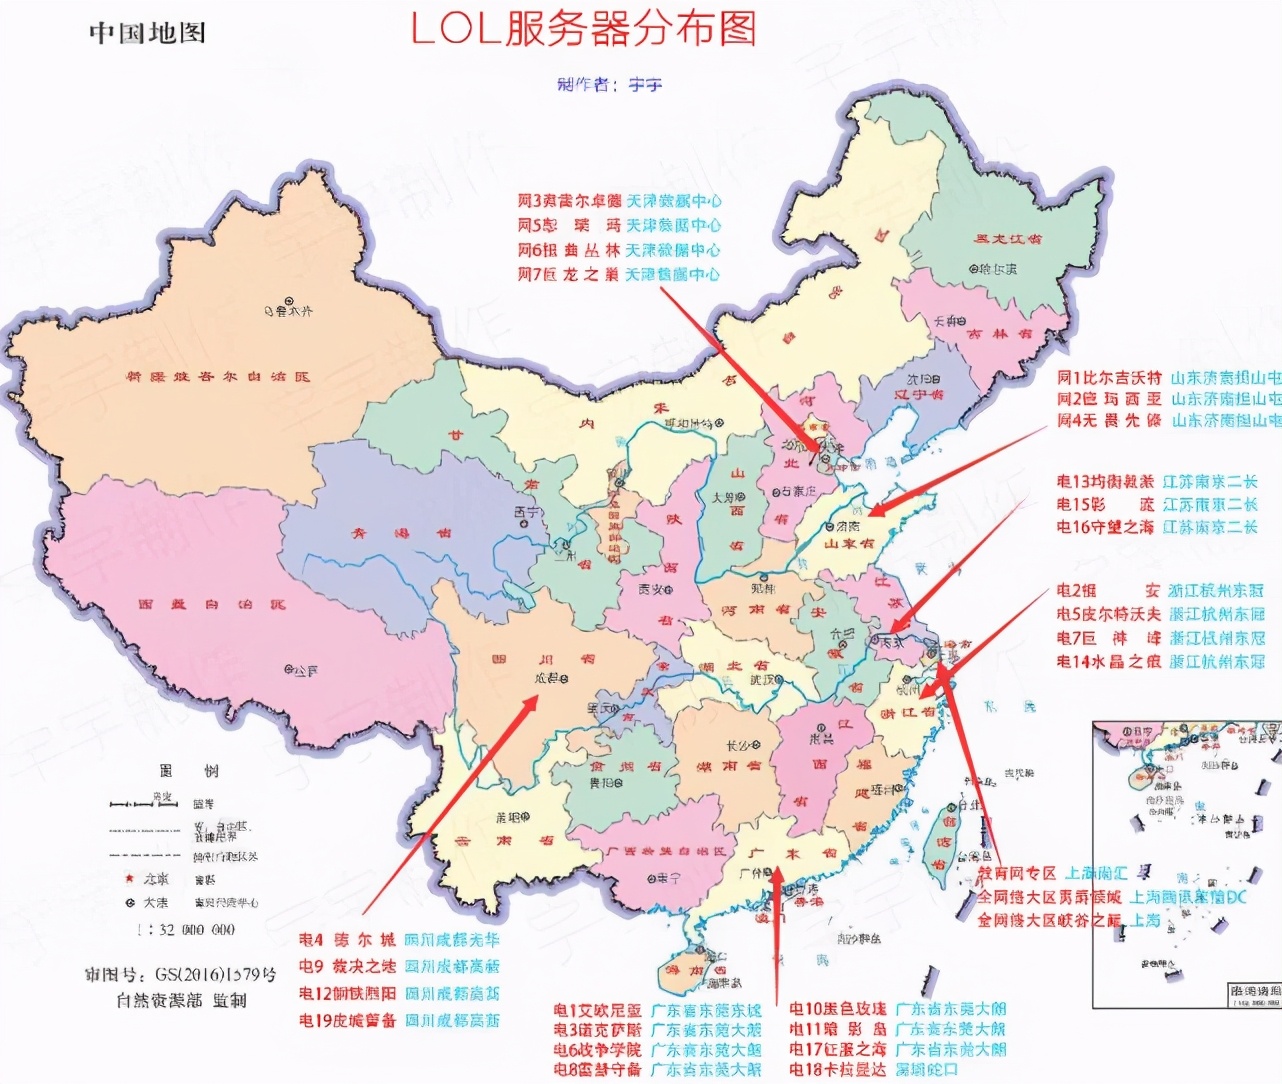 LOL各大服务器所在地，8个大区全都在广东，是其他省的两倍